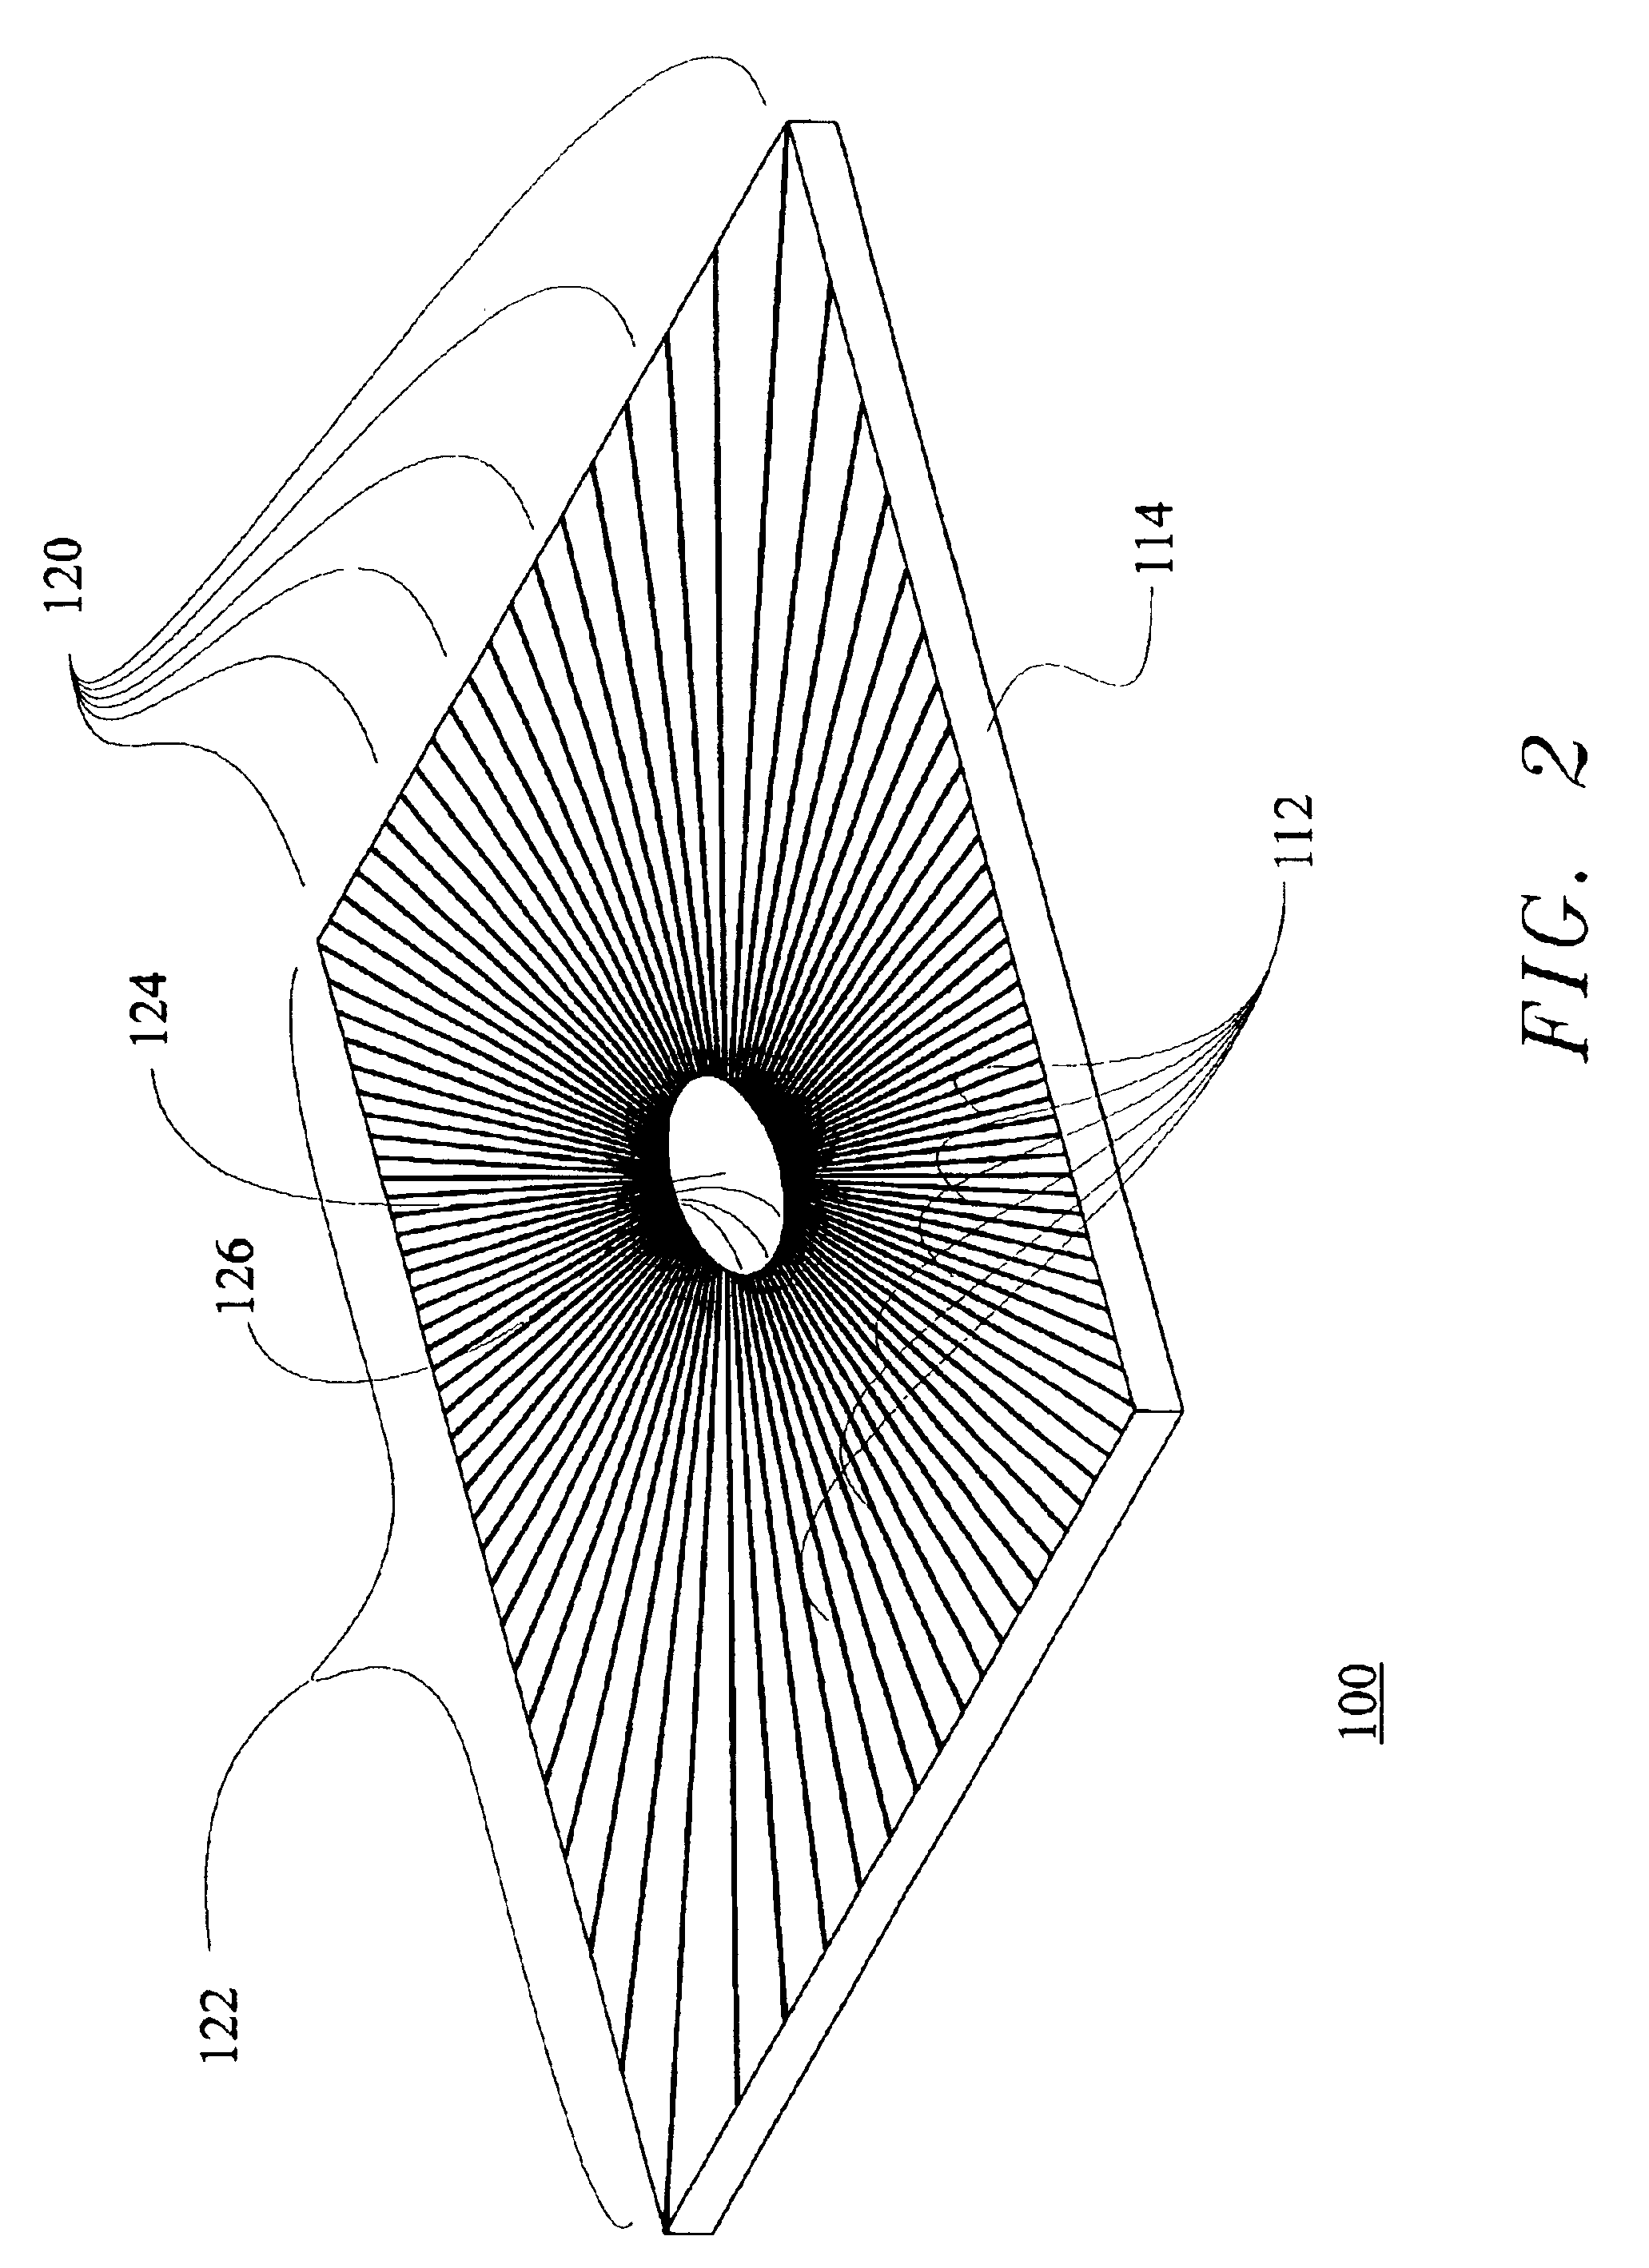 Fiber optic lighting radial arrangement and method for forming the same